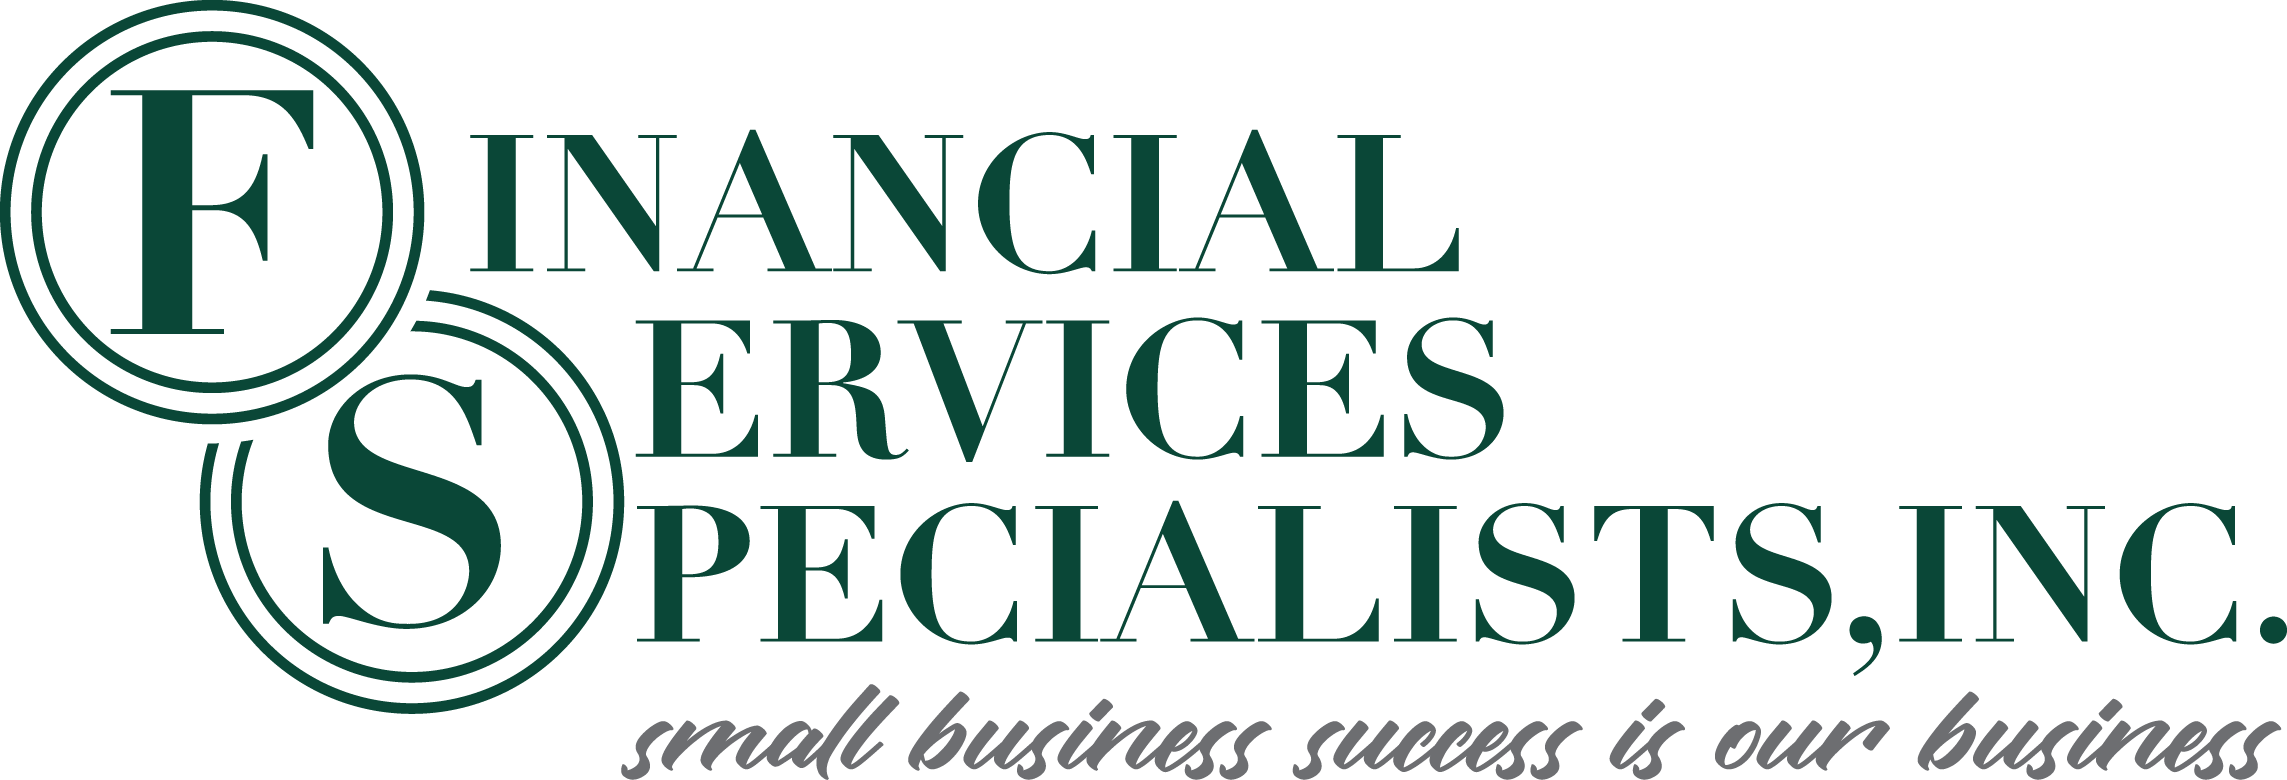 FinancialServicesSpecialists-IMPORTANT 2020-0002